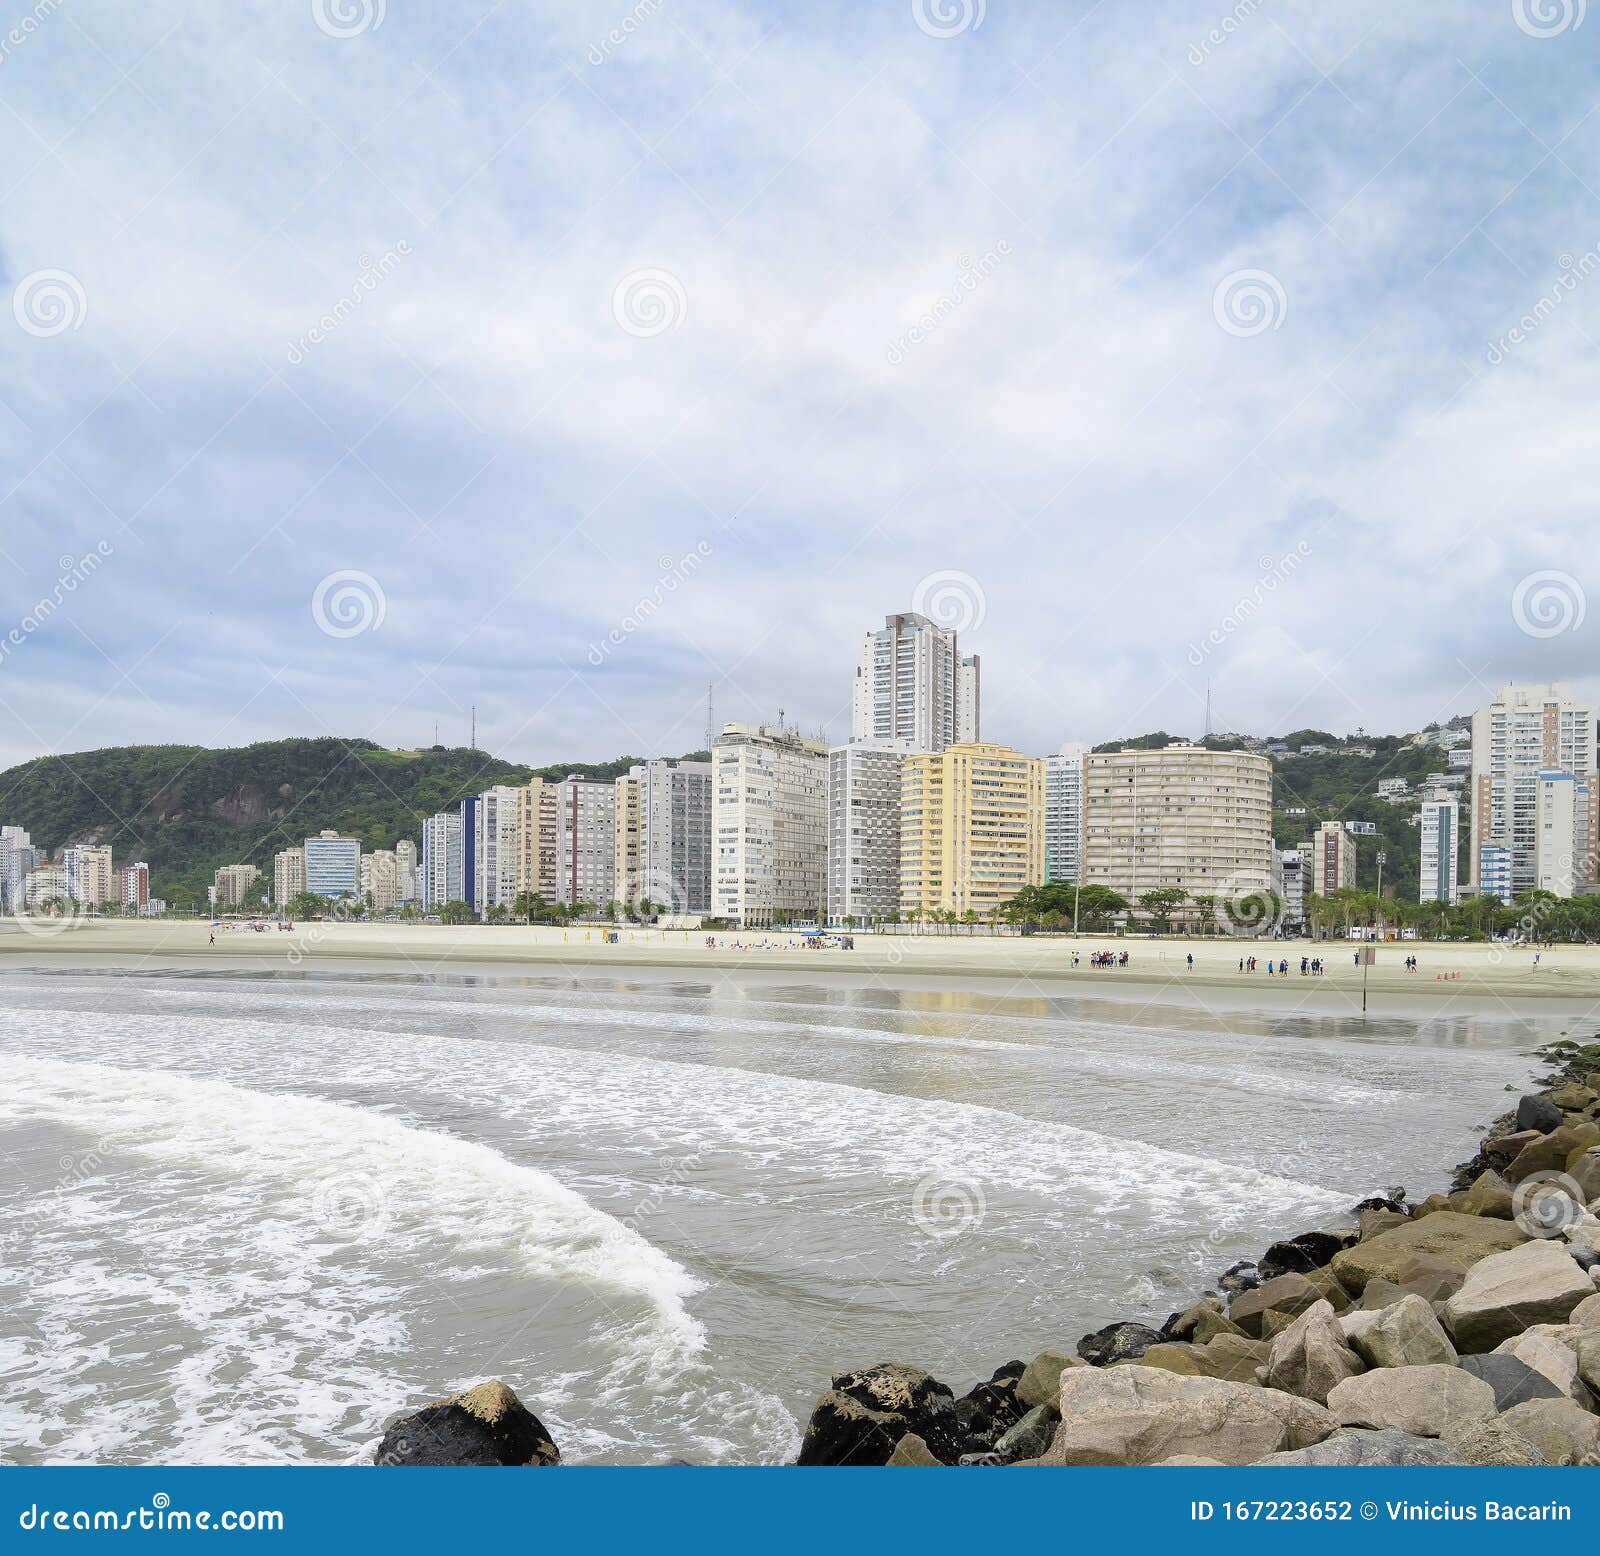 beach of santos sp brazil